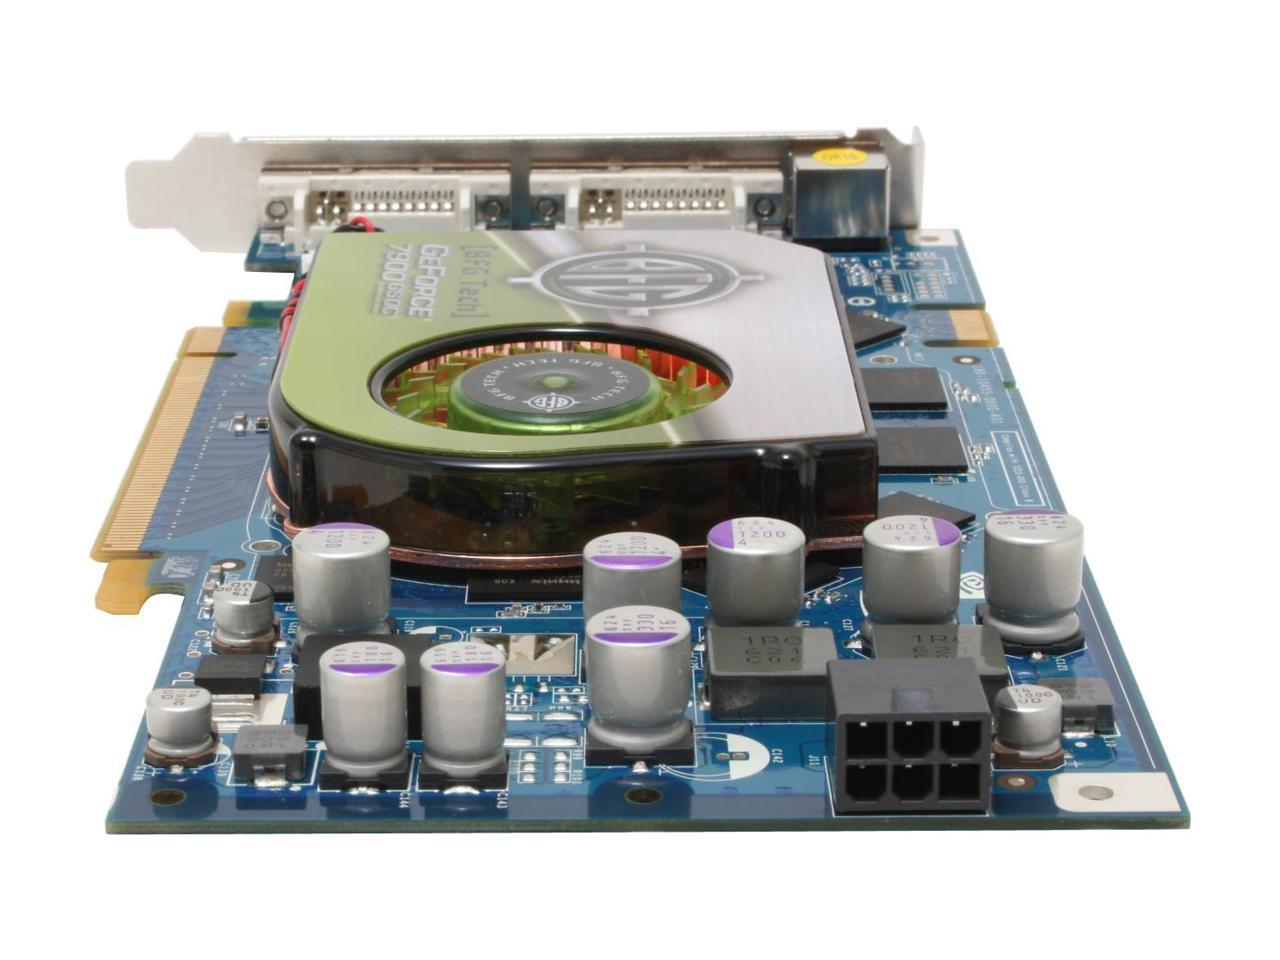 BFG Tech GeForce 7900GS 256MB GDDR3 PCI Express x16 SLI Support Video Card  BFGR79256GSOCE